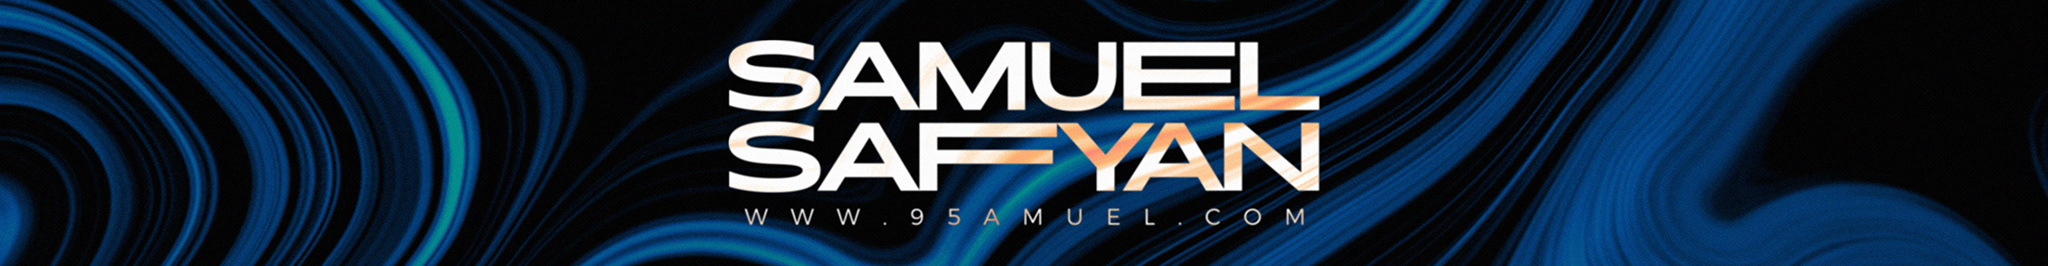 Samuel Safyan's profile banner